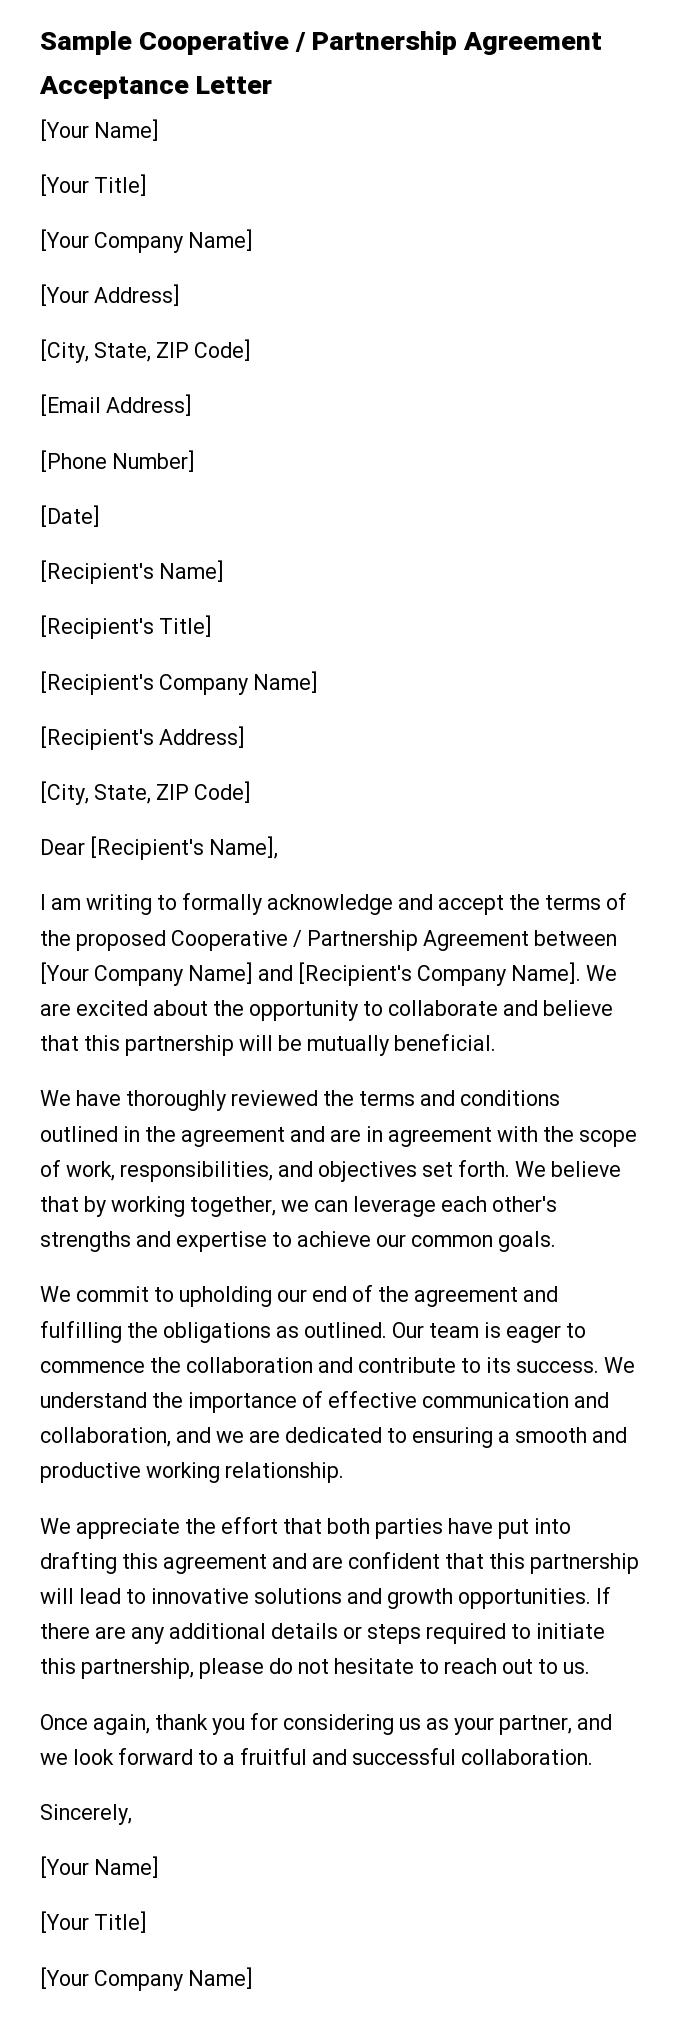 Sample Cooperative / Partnership Agreement Acceptance Letter